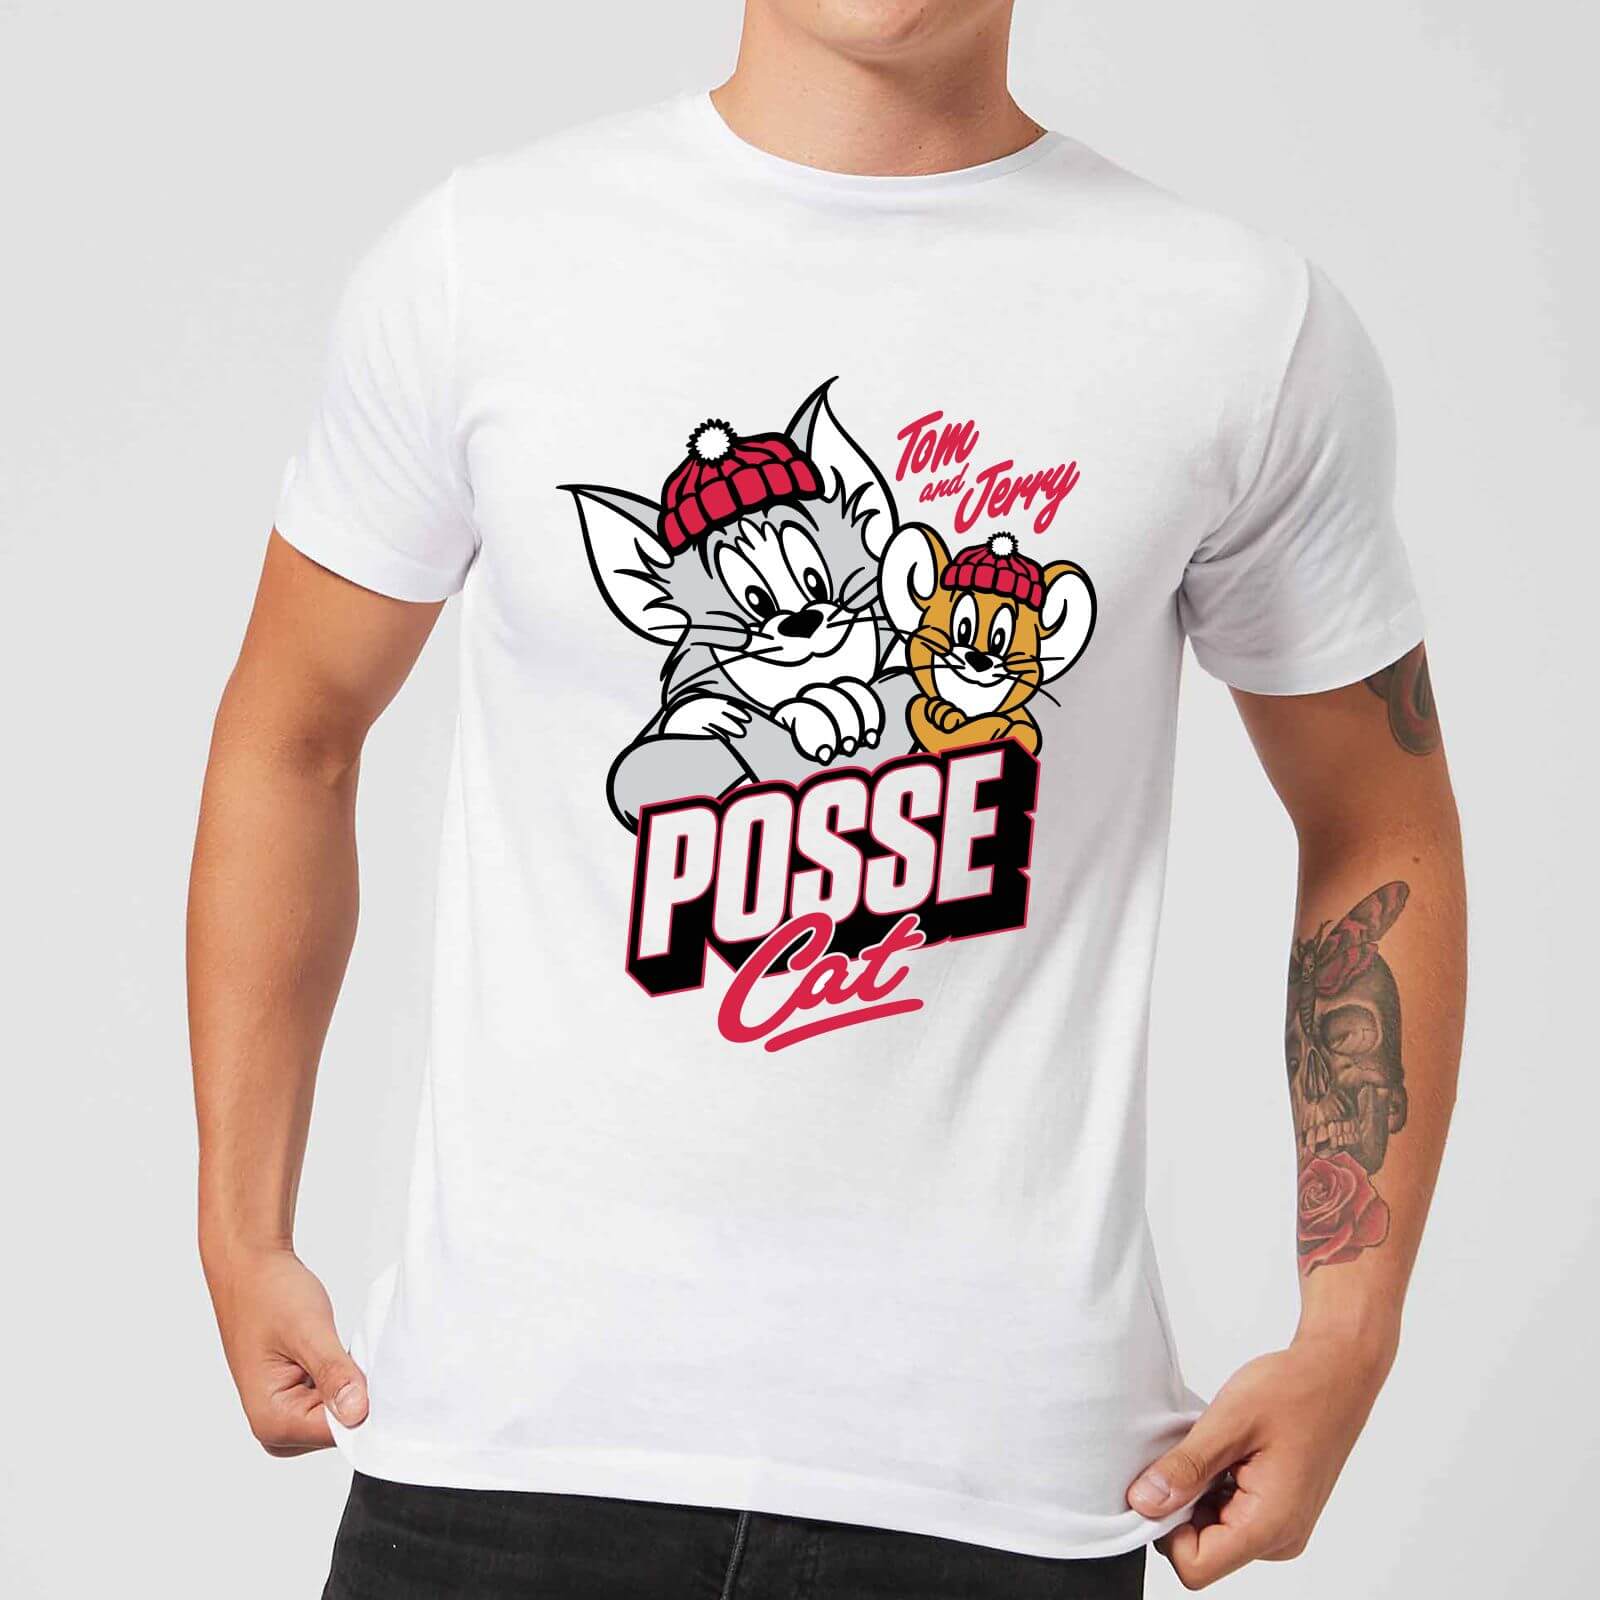 Tom & Jerry Posse Cat Men's T-Shirt - White - 3XL